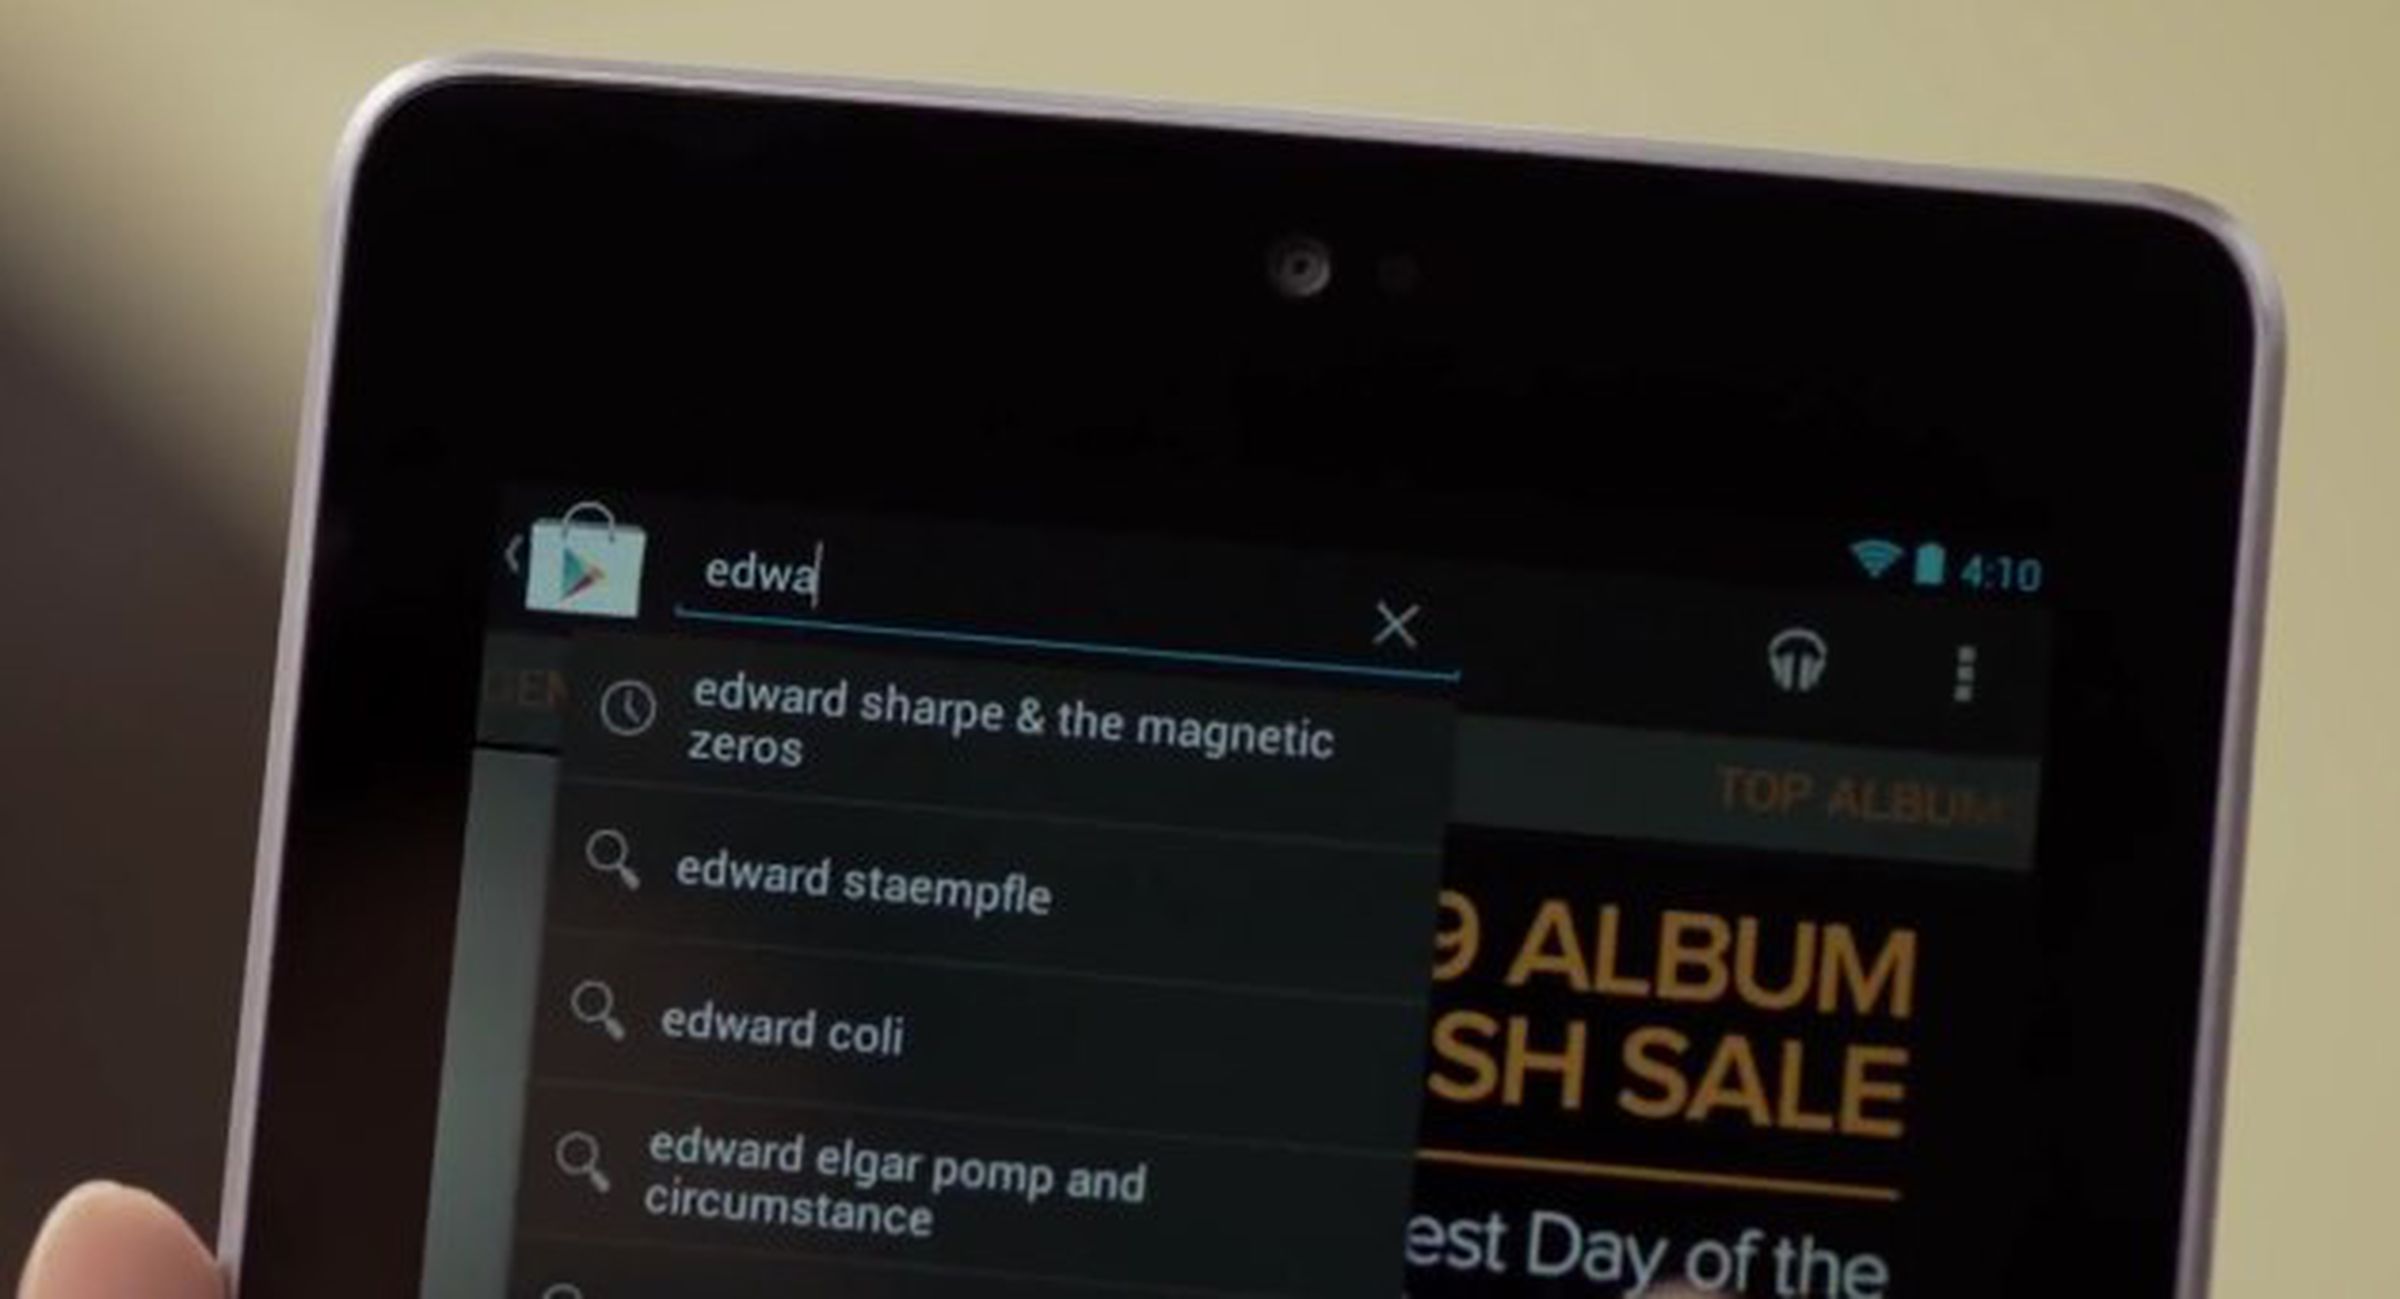 Nexus 7 tablet introductory video screenshots